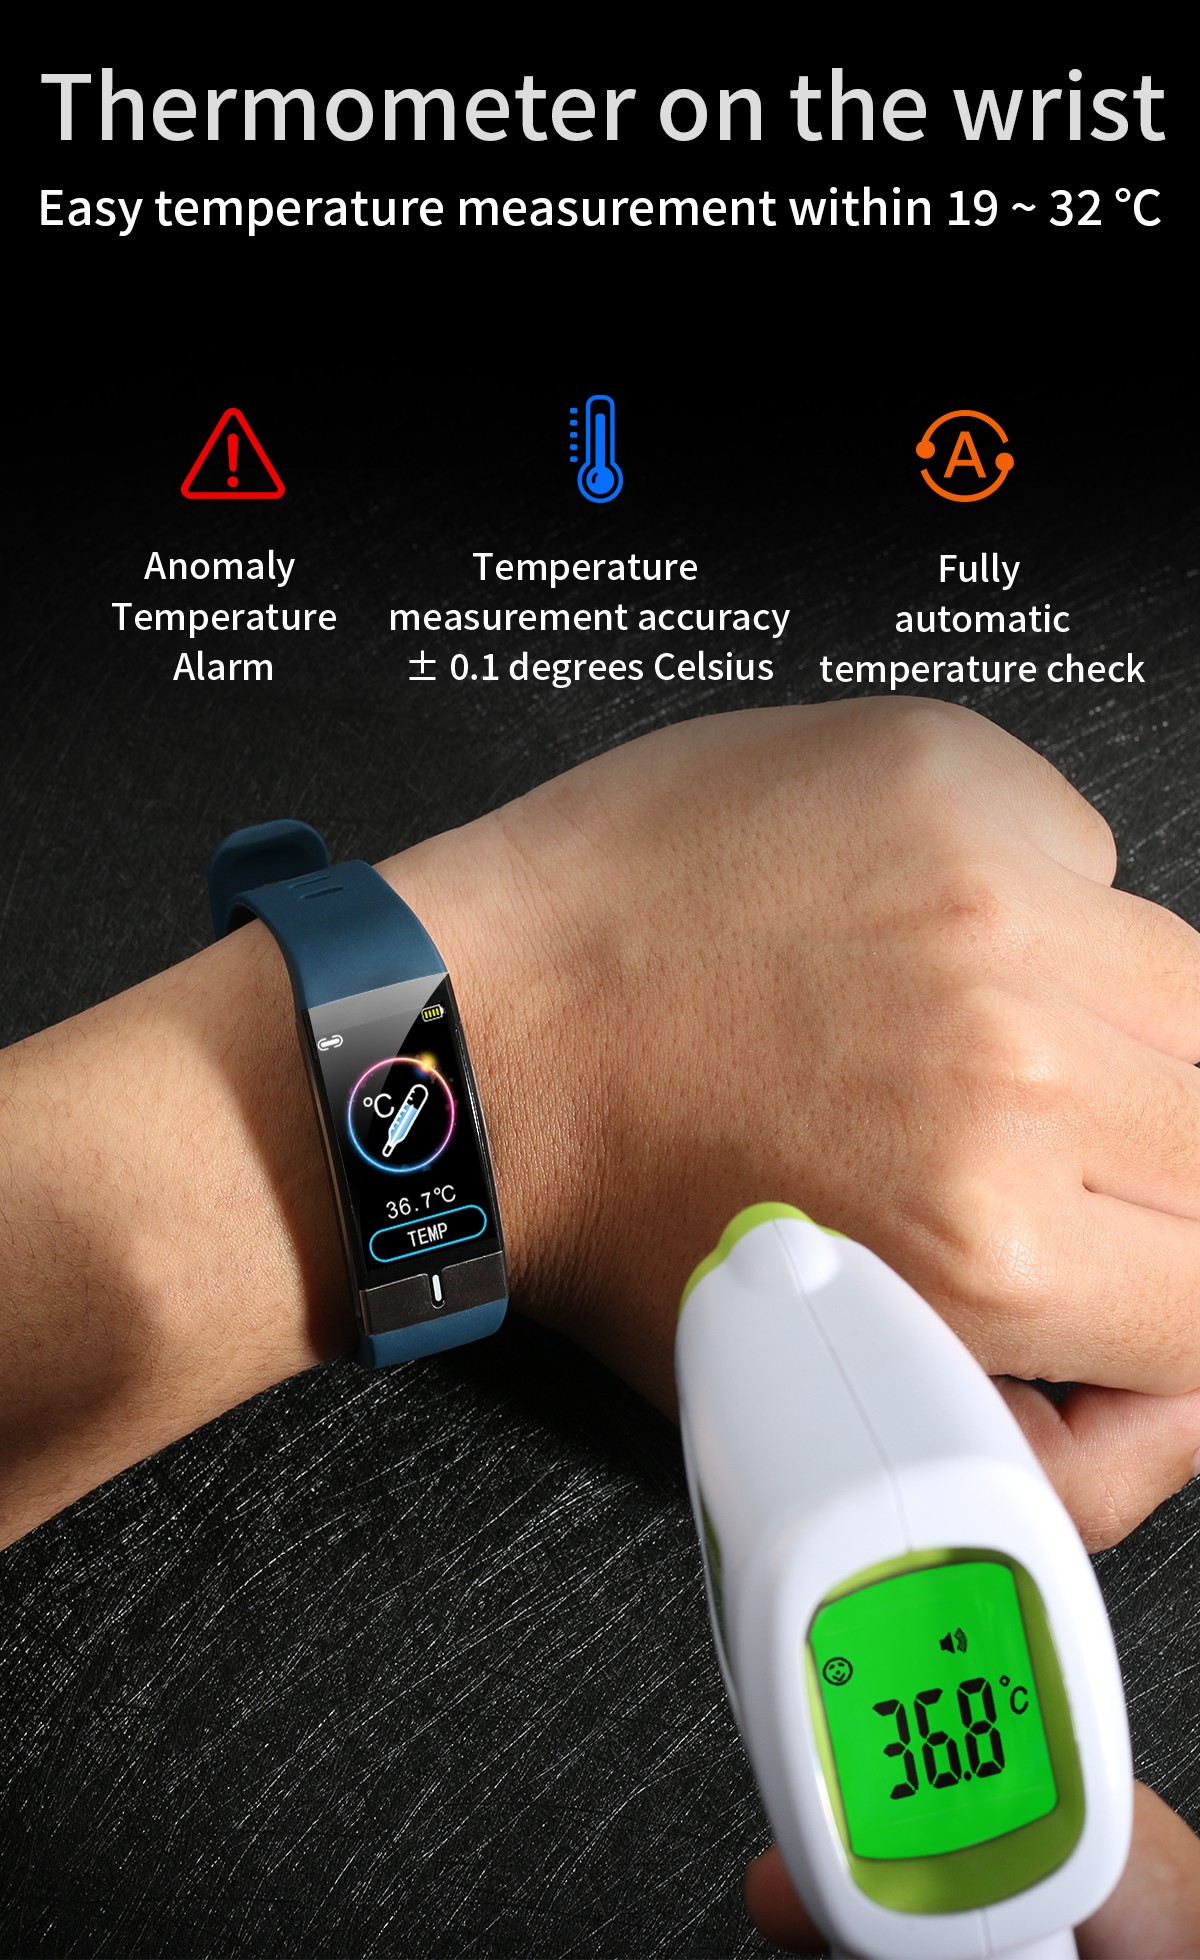 E66 Temperature Measure Smart Watch Thermometer on the wrist